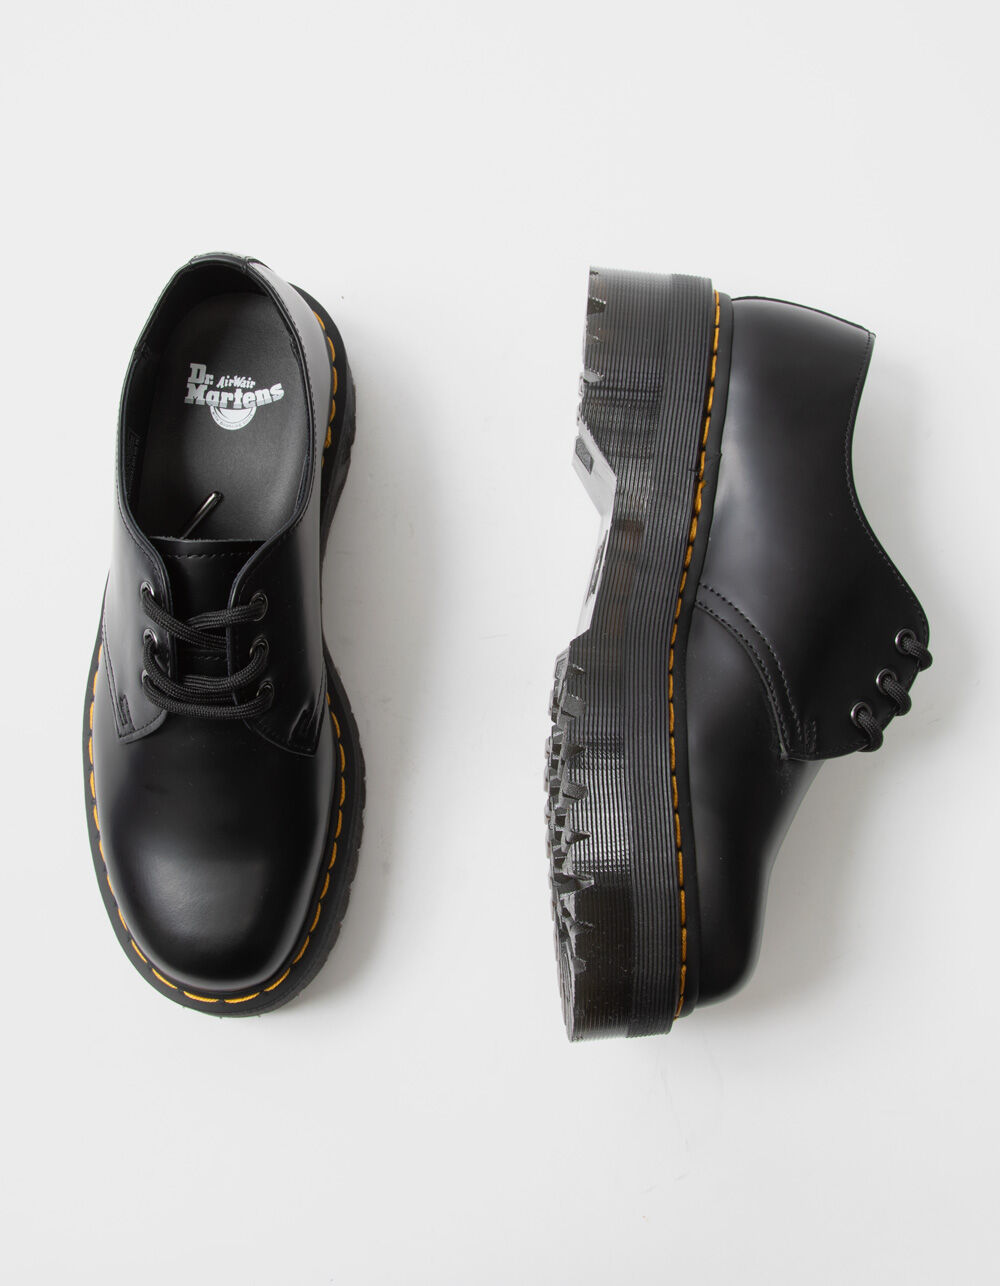 DR. MARTENS 1461 Quad Smooth Leather Womens Platform Shoes - BLACK